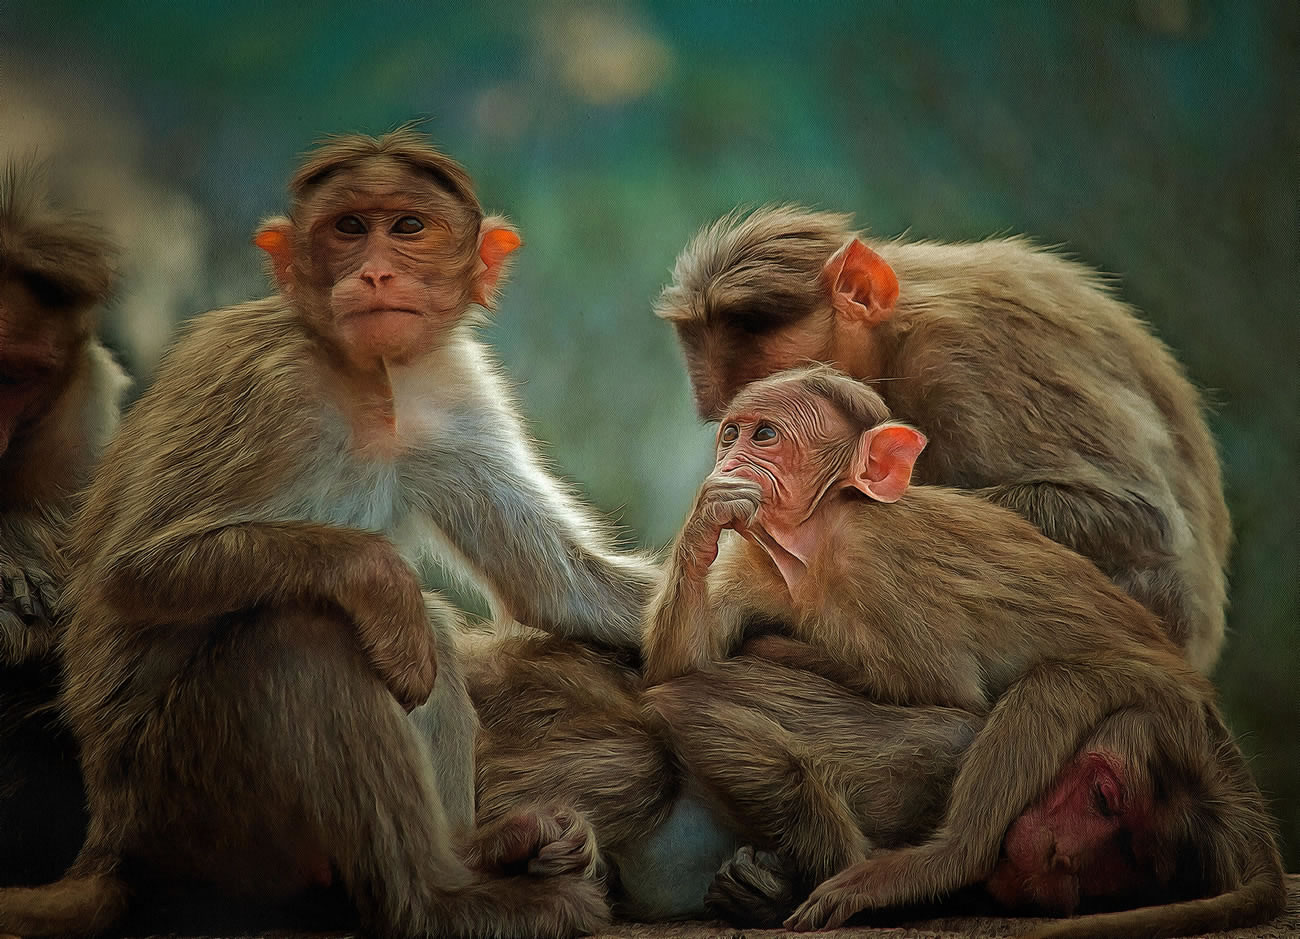 Artistic image of monkeys